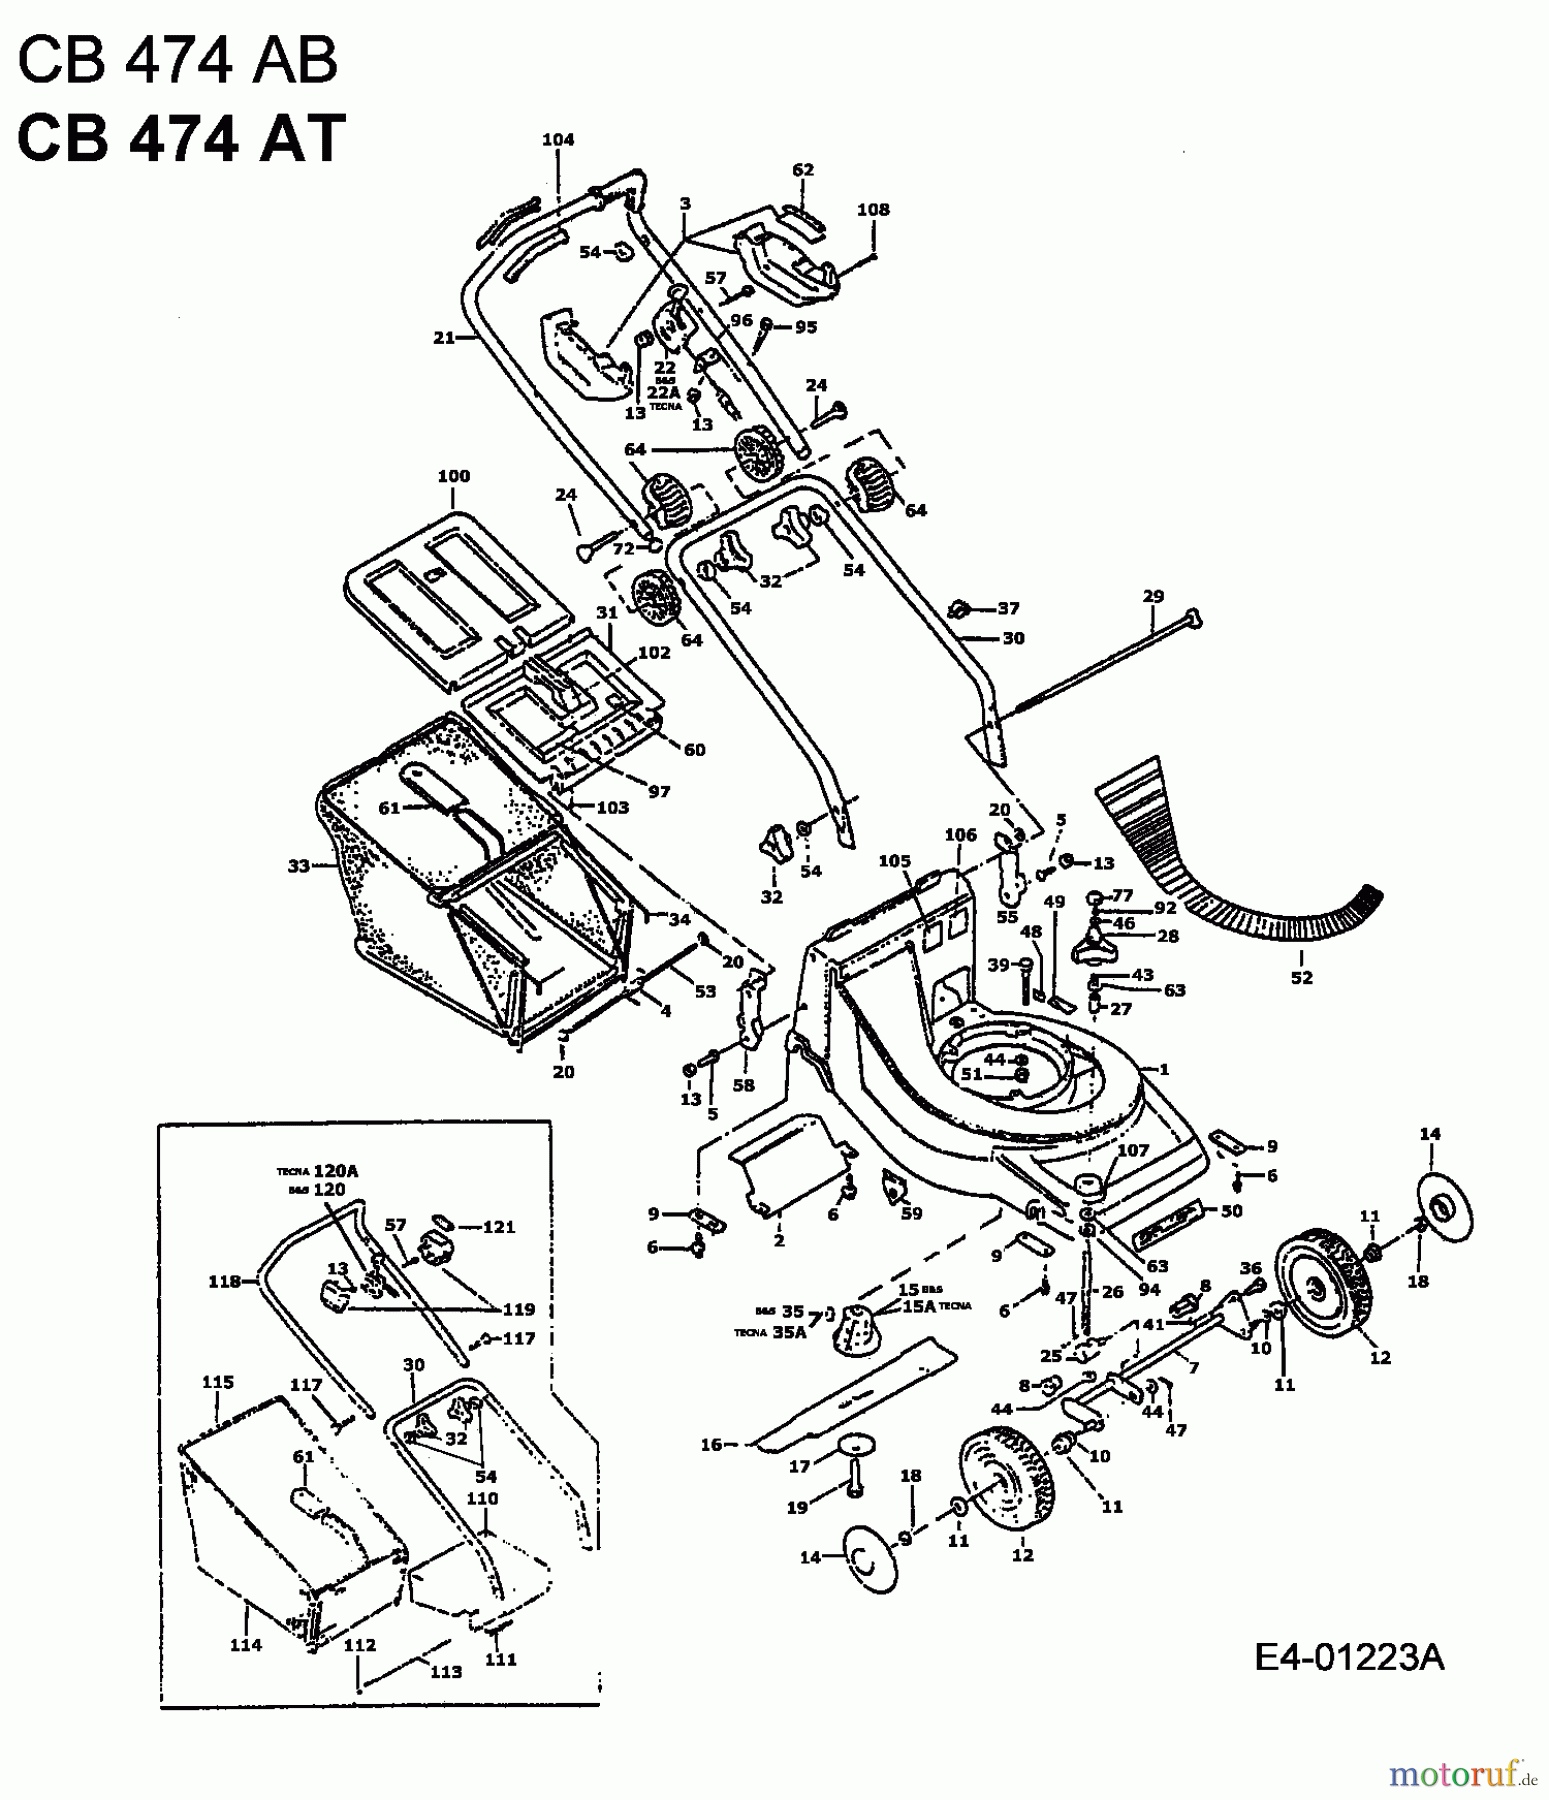  MTD Motormäher CB 474 AB 901B467A002  (1994) Grundgerät